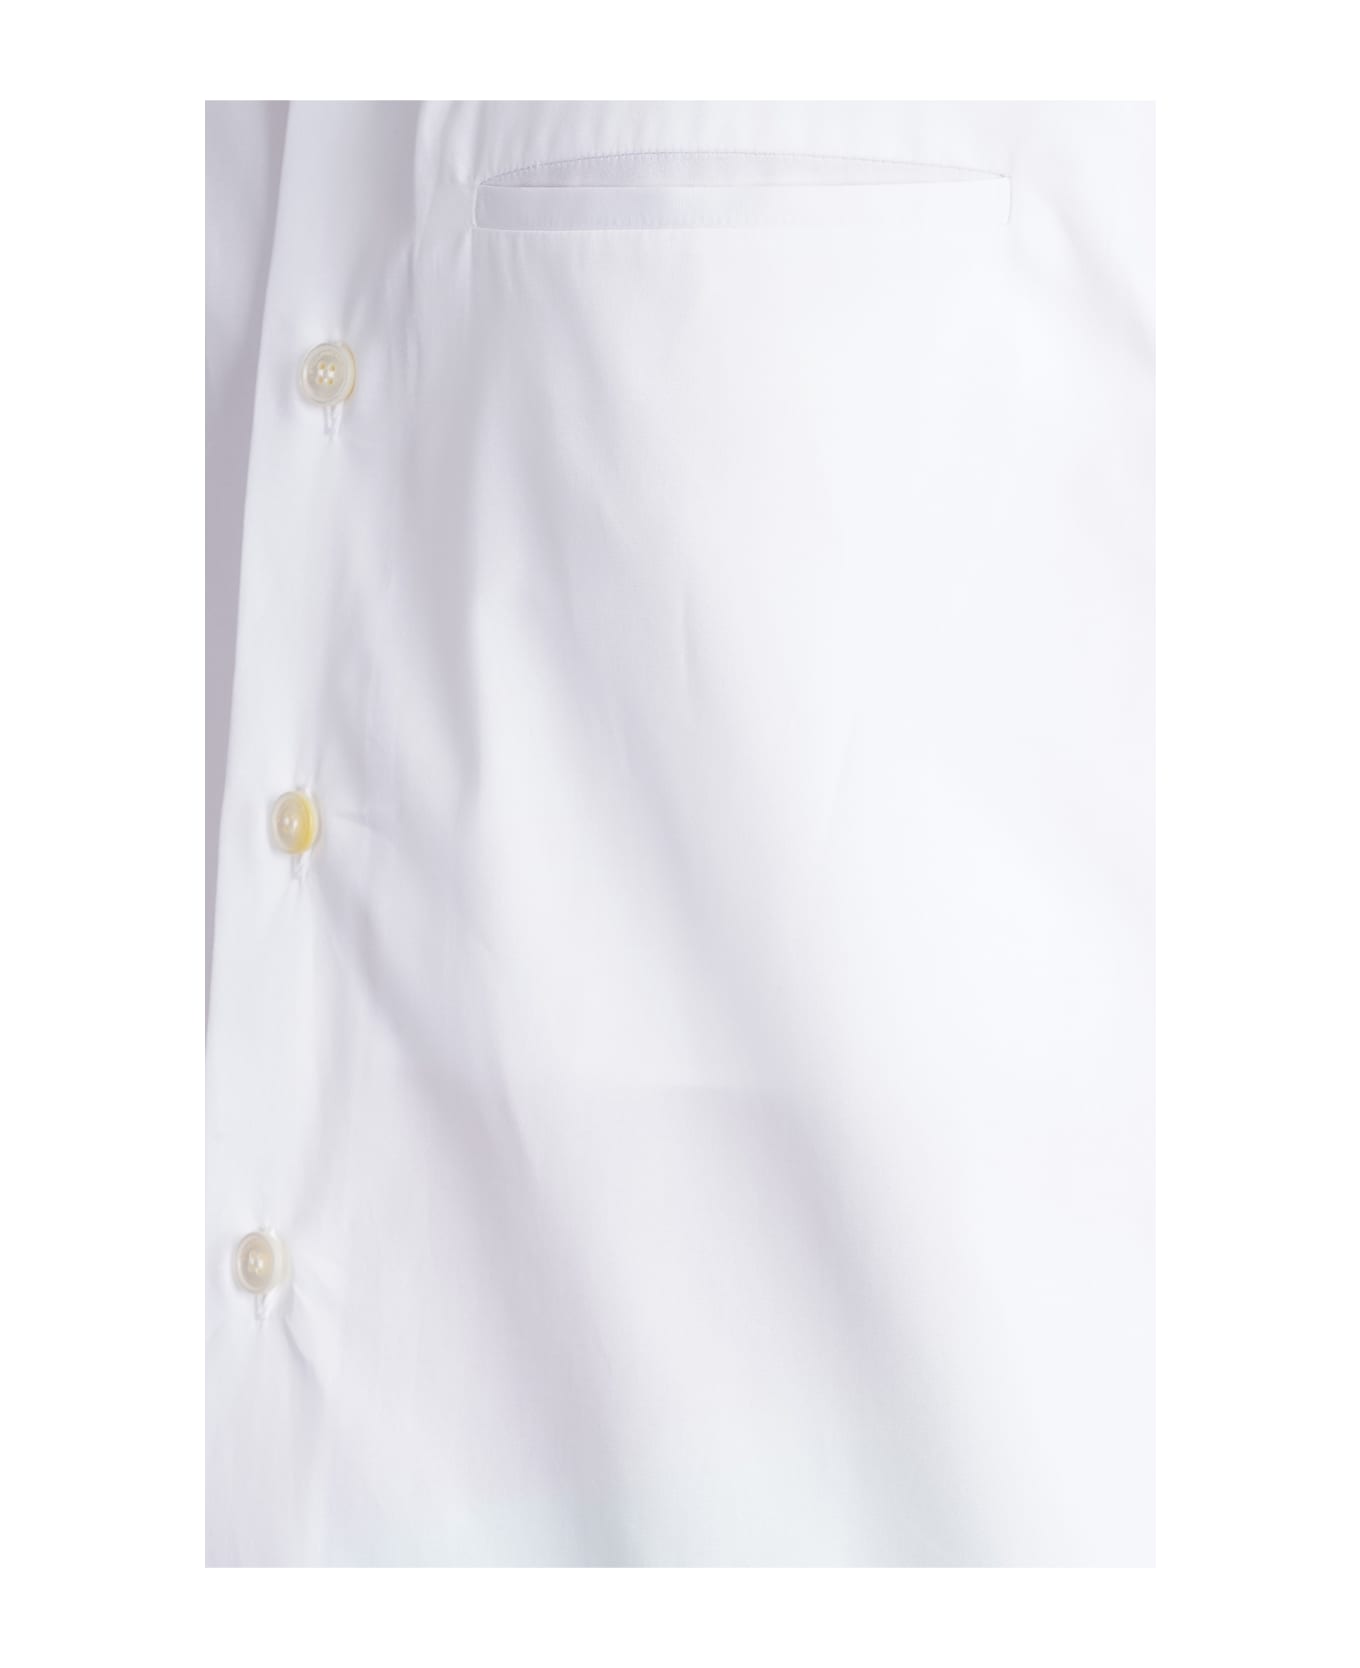 Stella McCartney Shirt In White Cotton - white